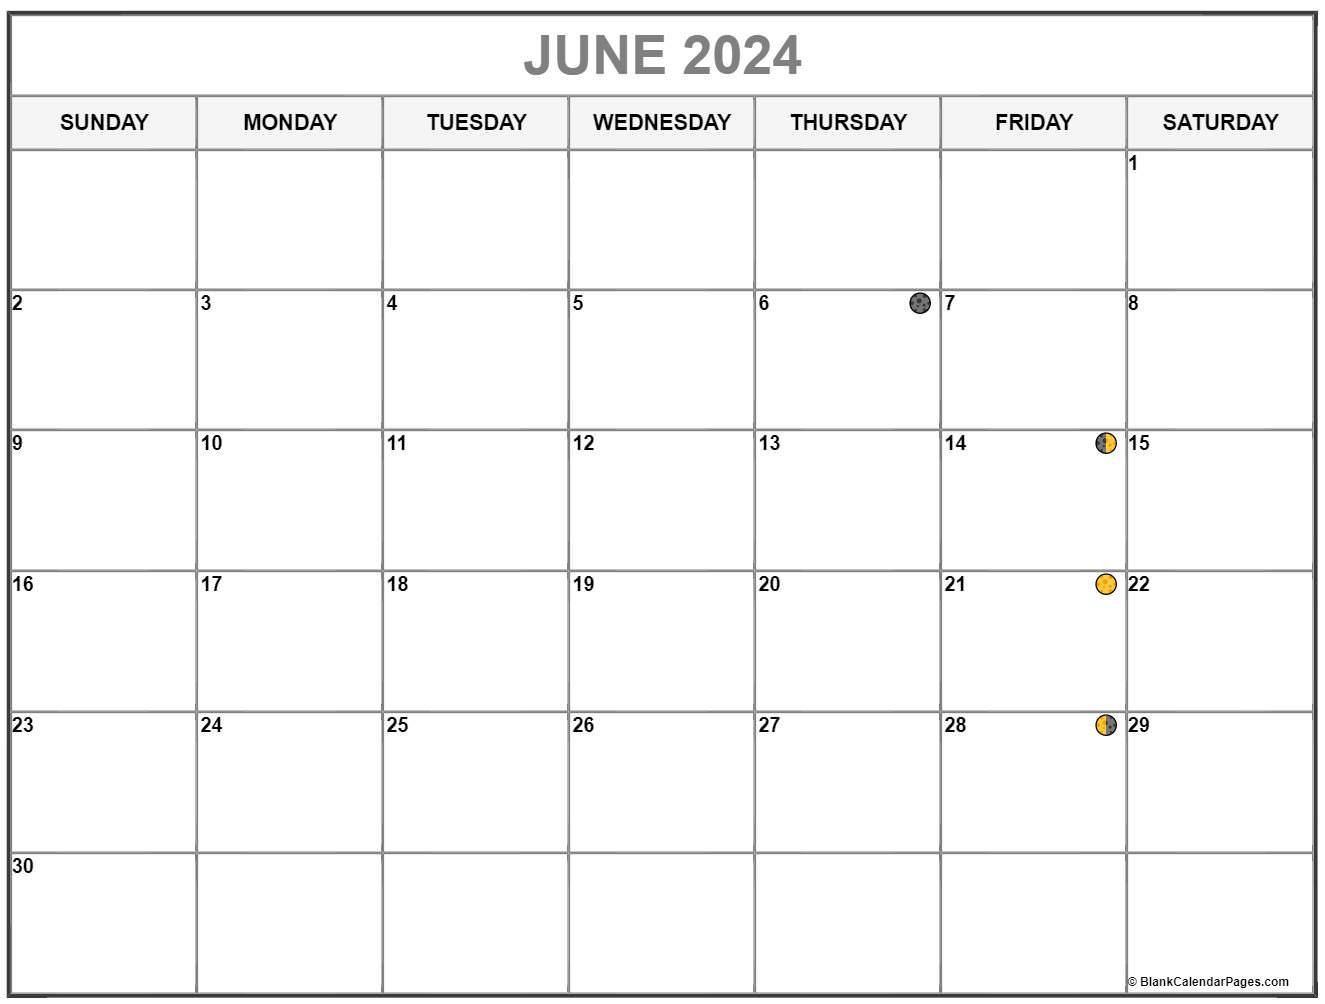 June 2024 Lunar Calendar  Moon Phase Calendar